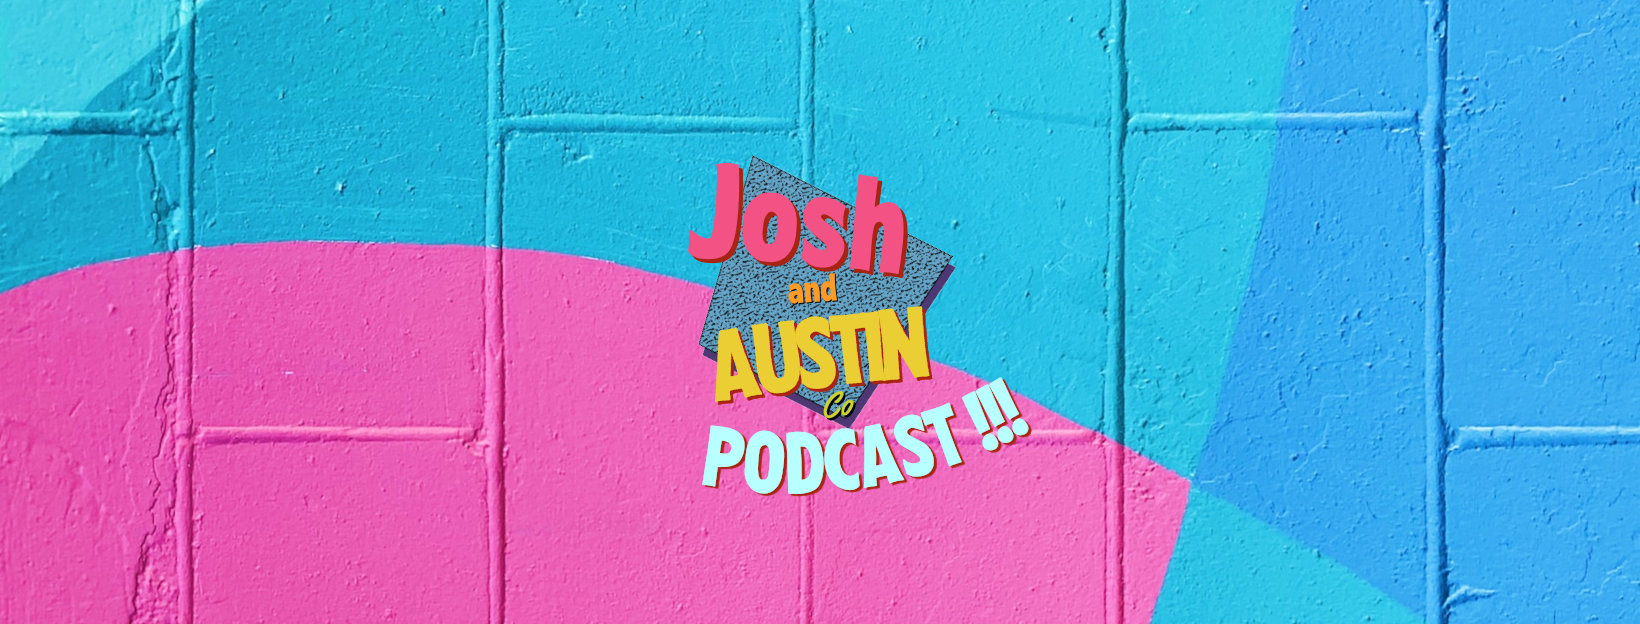 Josh and Austin Co podcast